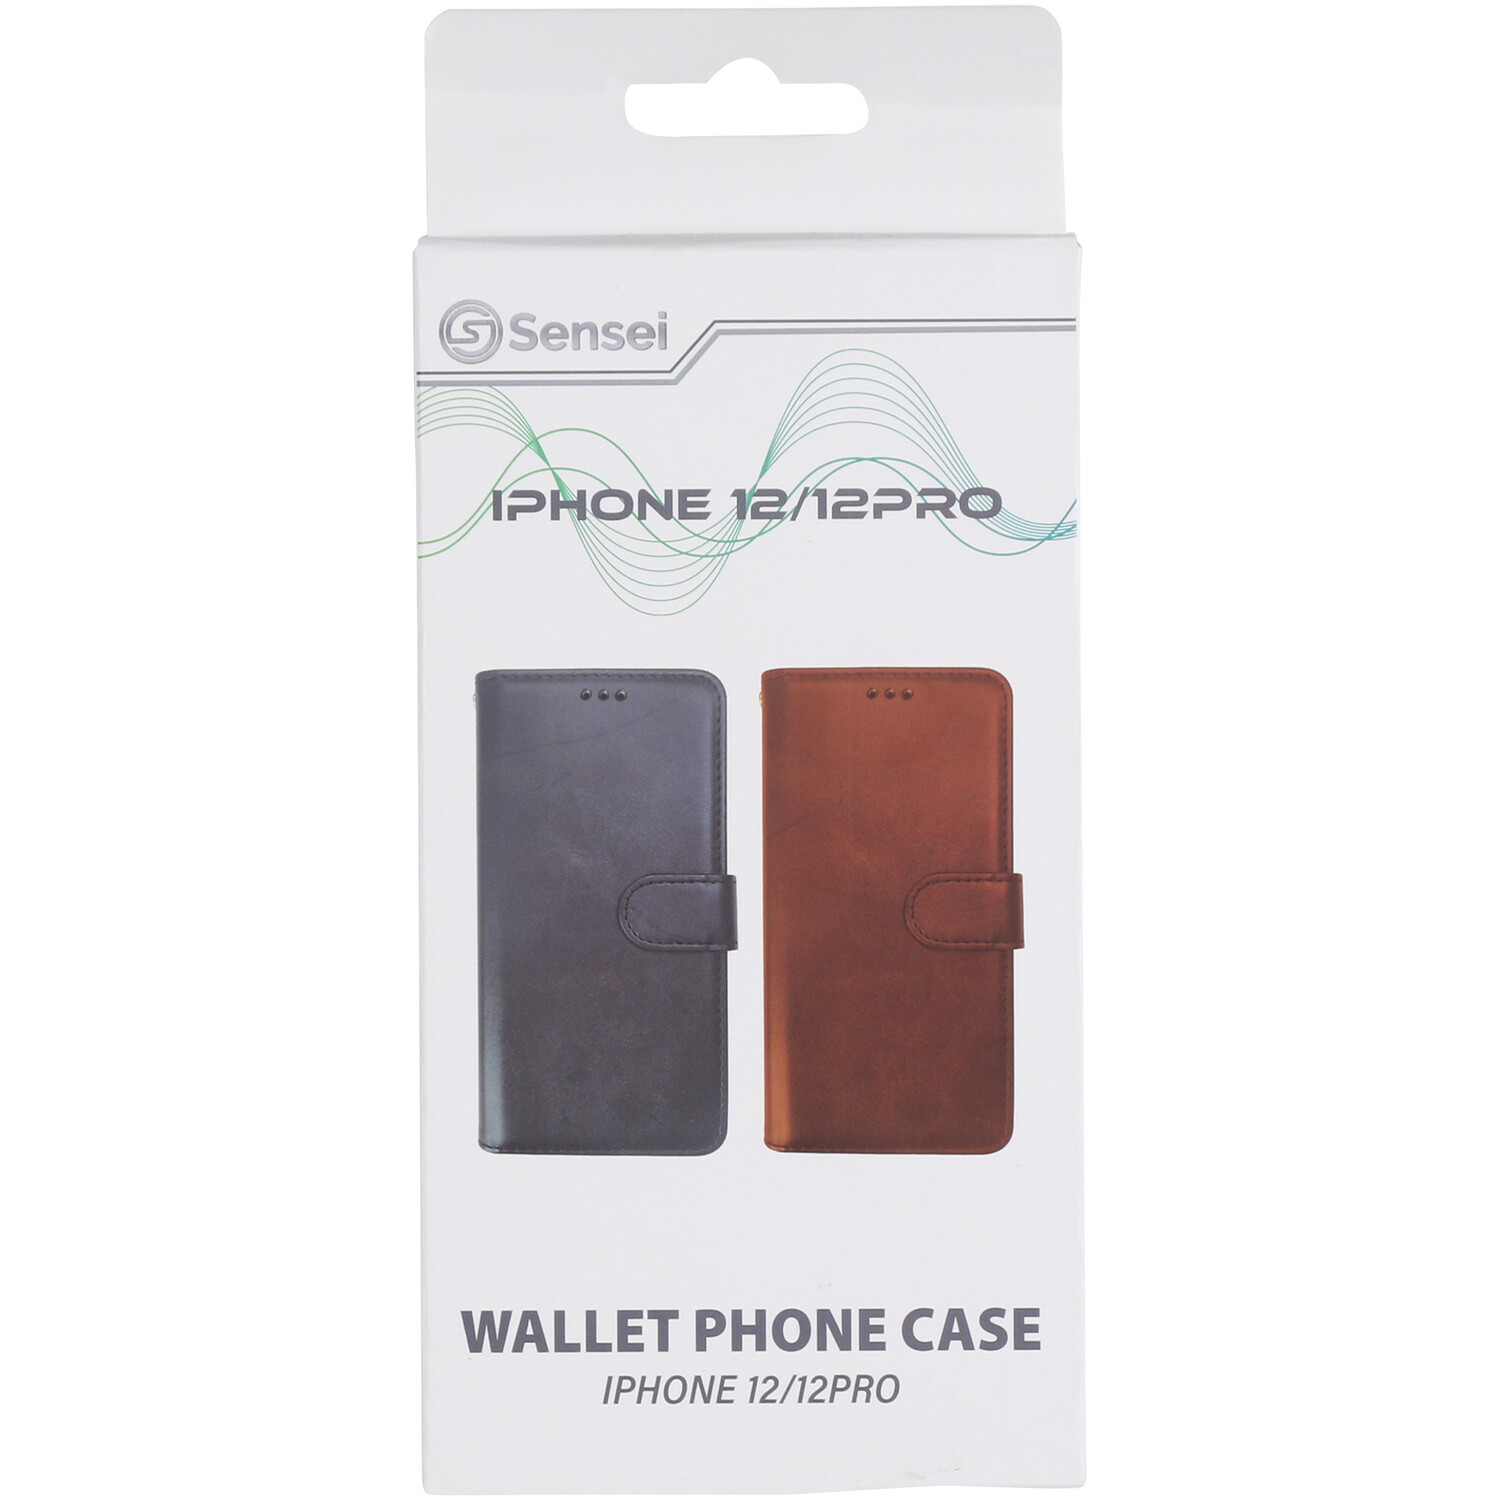 Wallet Phone Case - 12/12 Pro Image 1